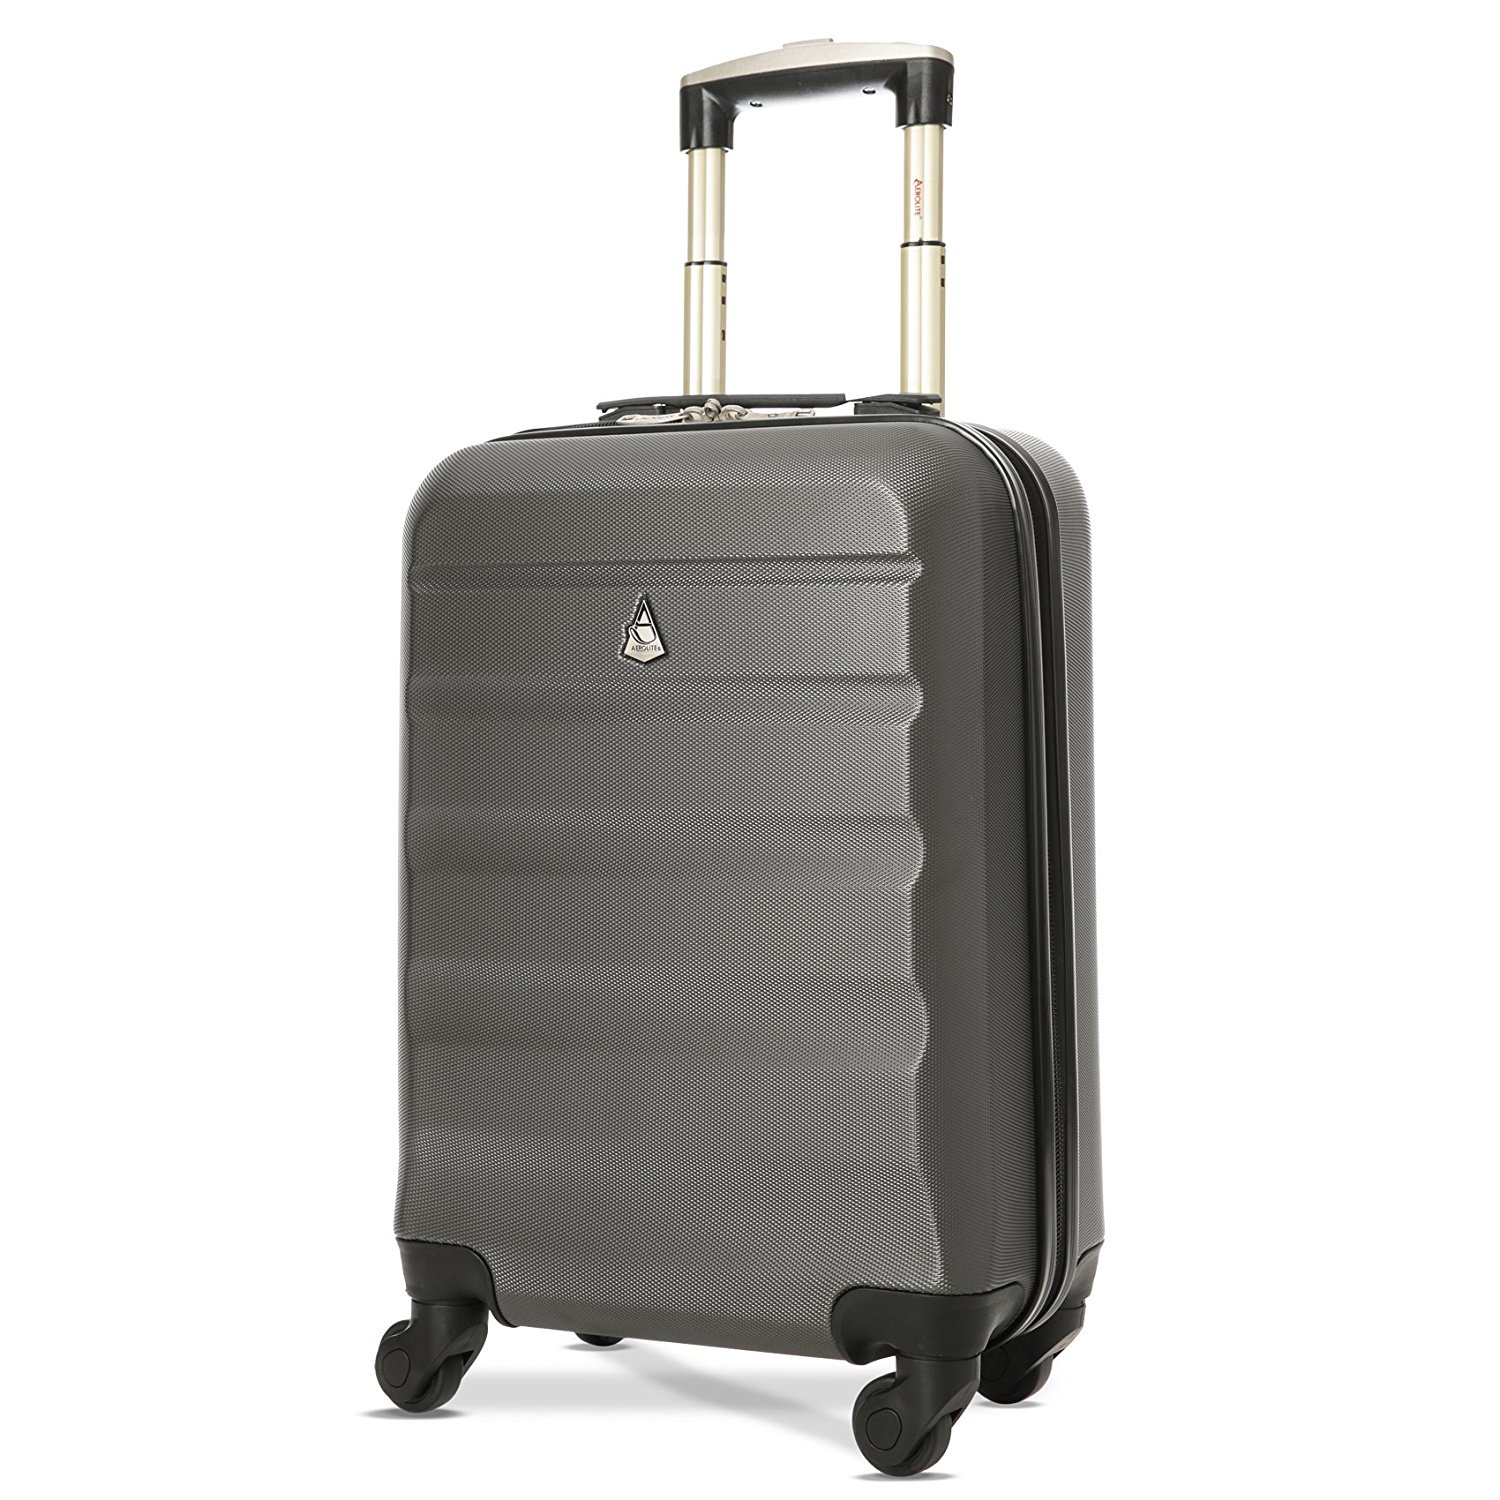 Win an Aerolite Cabin Luggage Case!